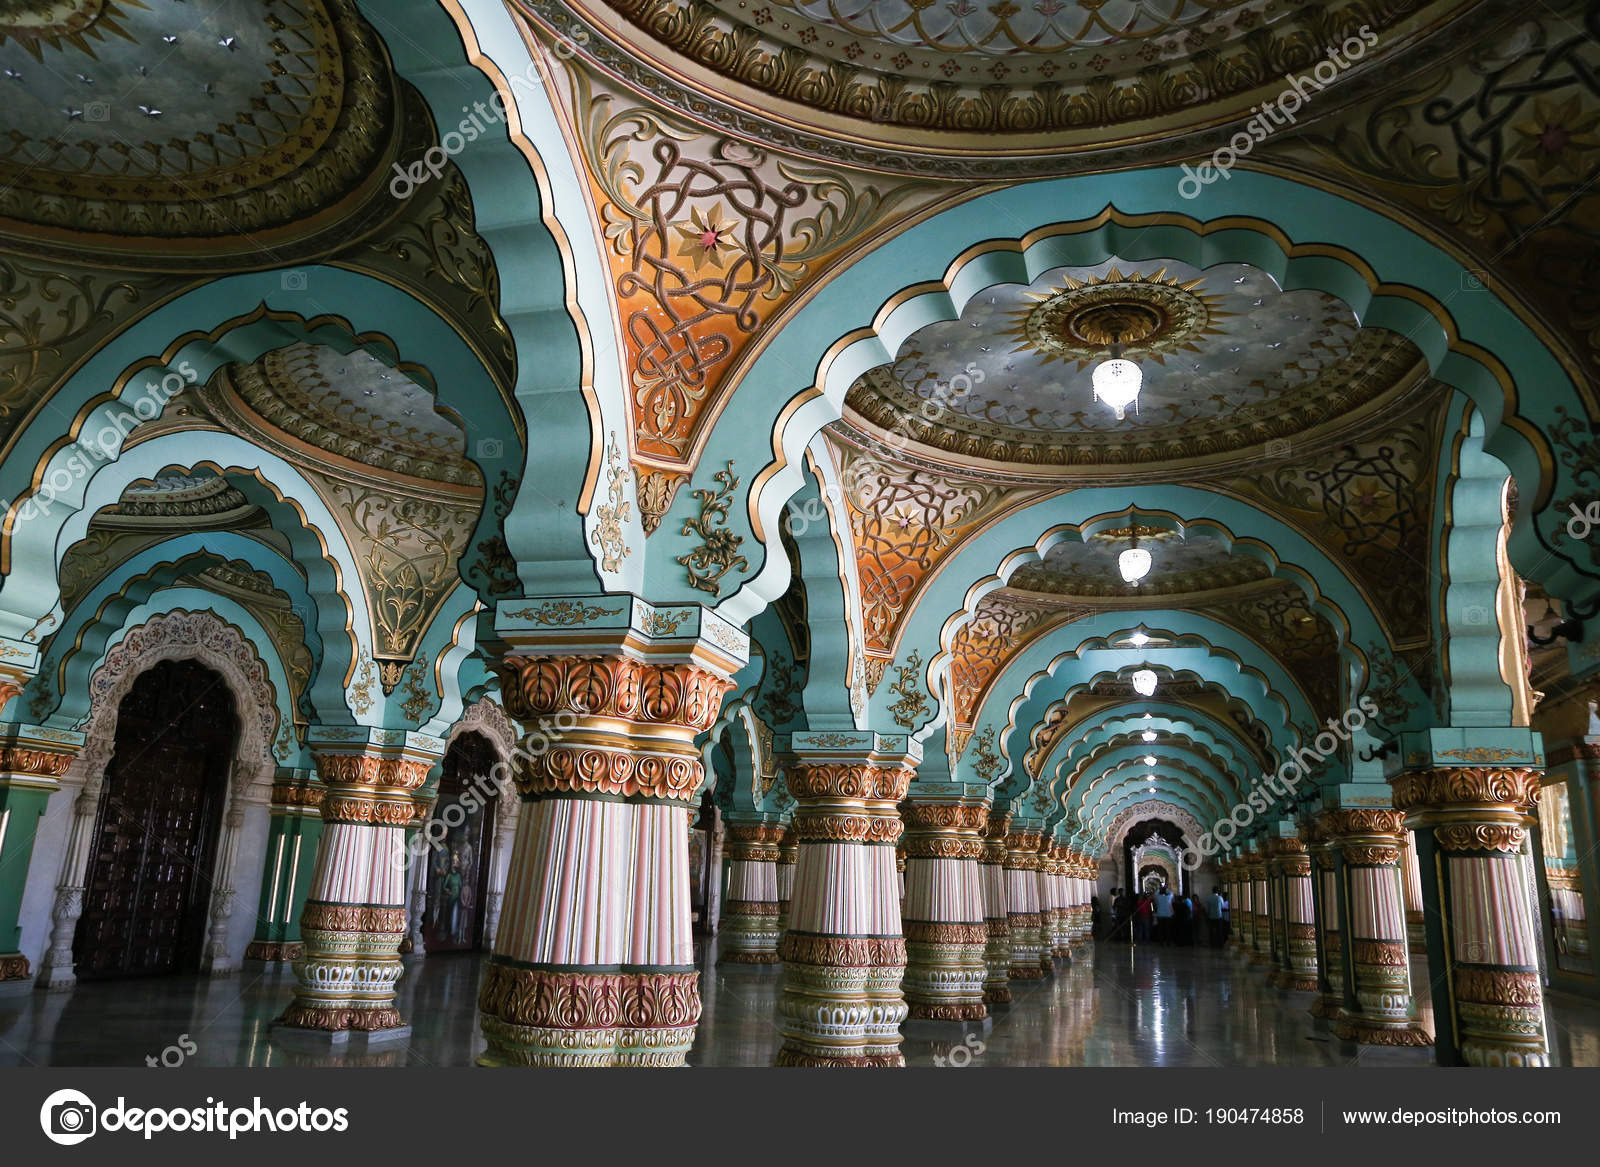 Mysore Palace Historical Architecture In Mysore India